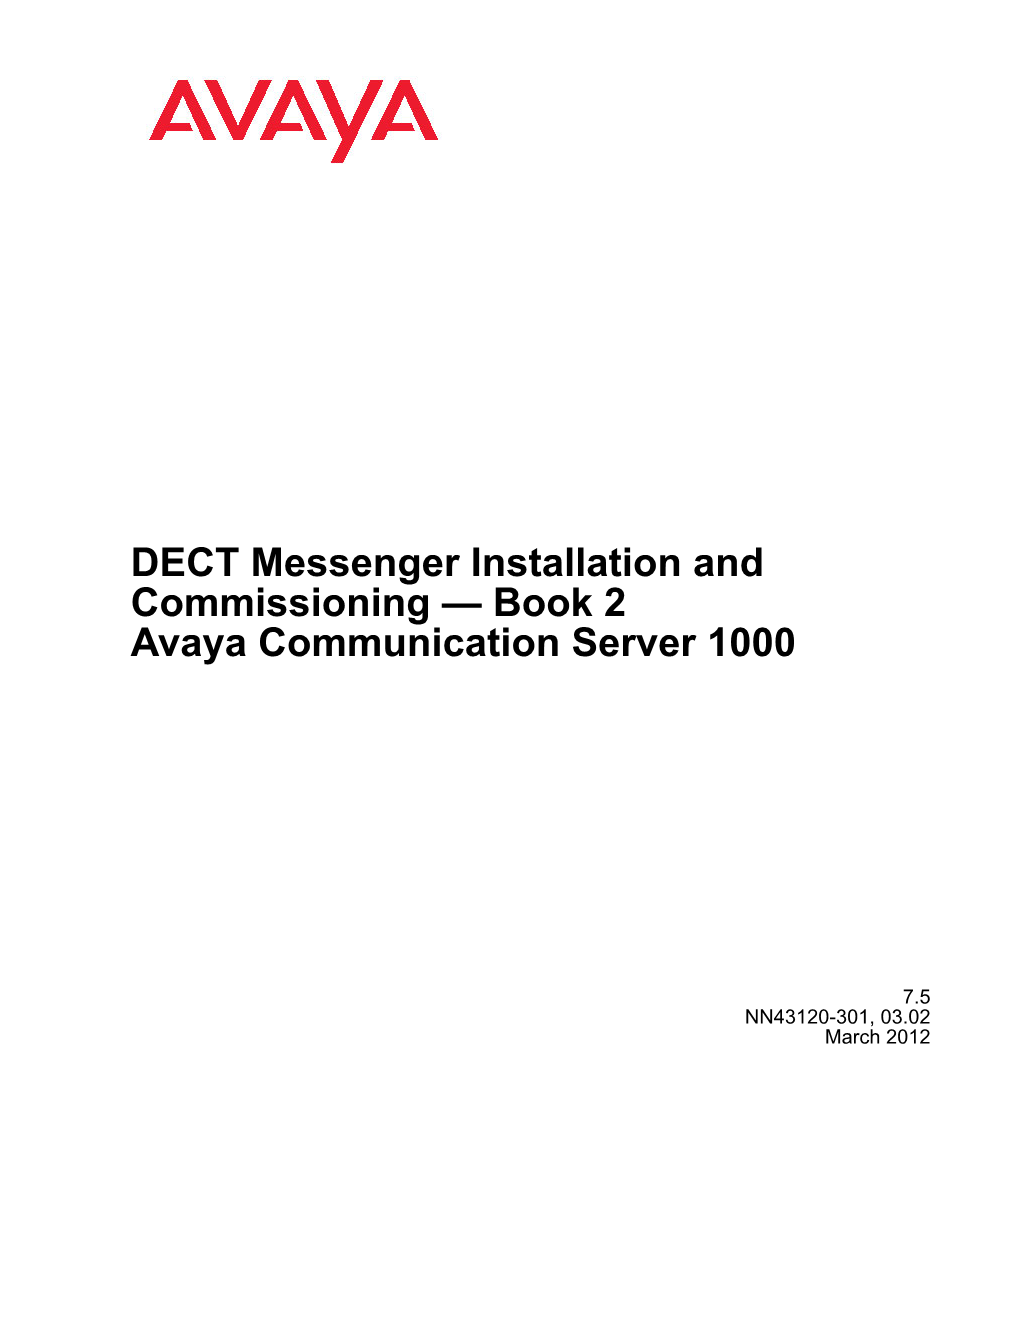 DECT Messenger Installation and Commissioning — Book 2 Avaya Communication Server 1000